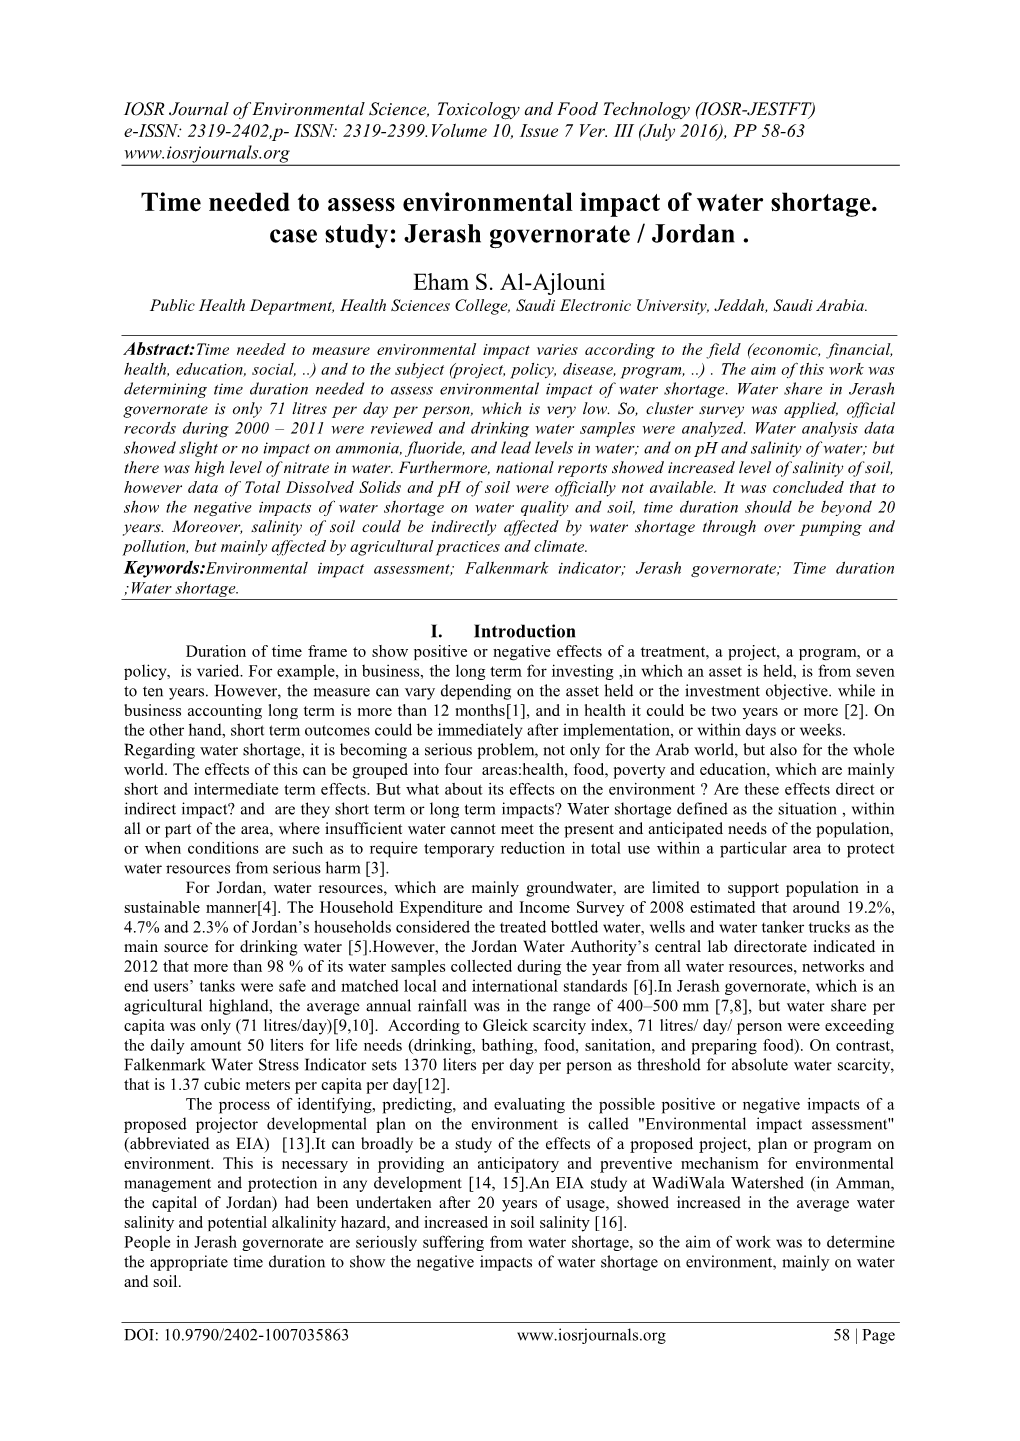 Time Needed to Assess Environmental Impact of Water Shortage. Case Study: Jerash Governorate / Jordan